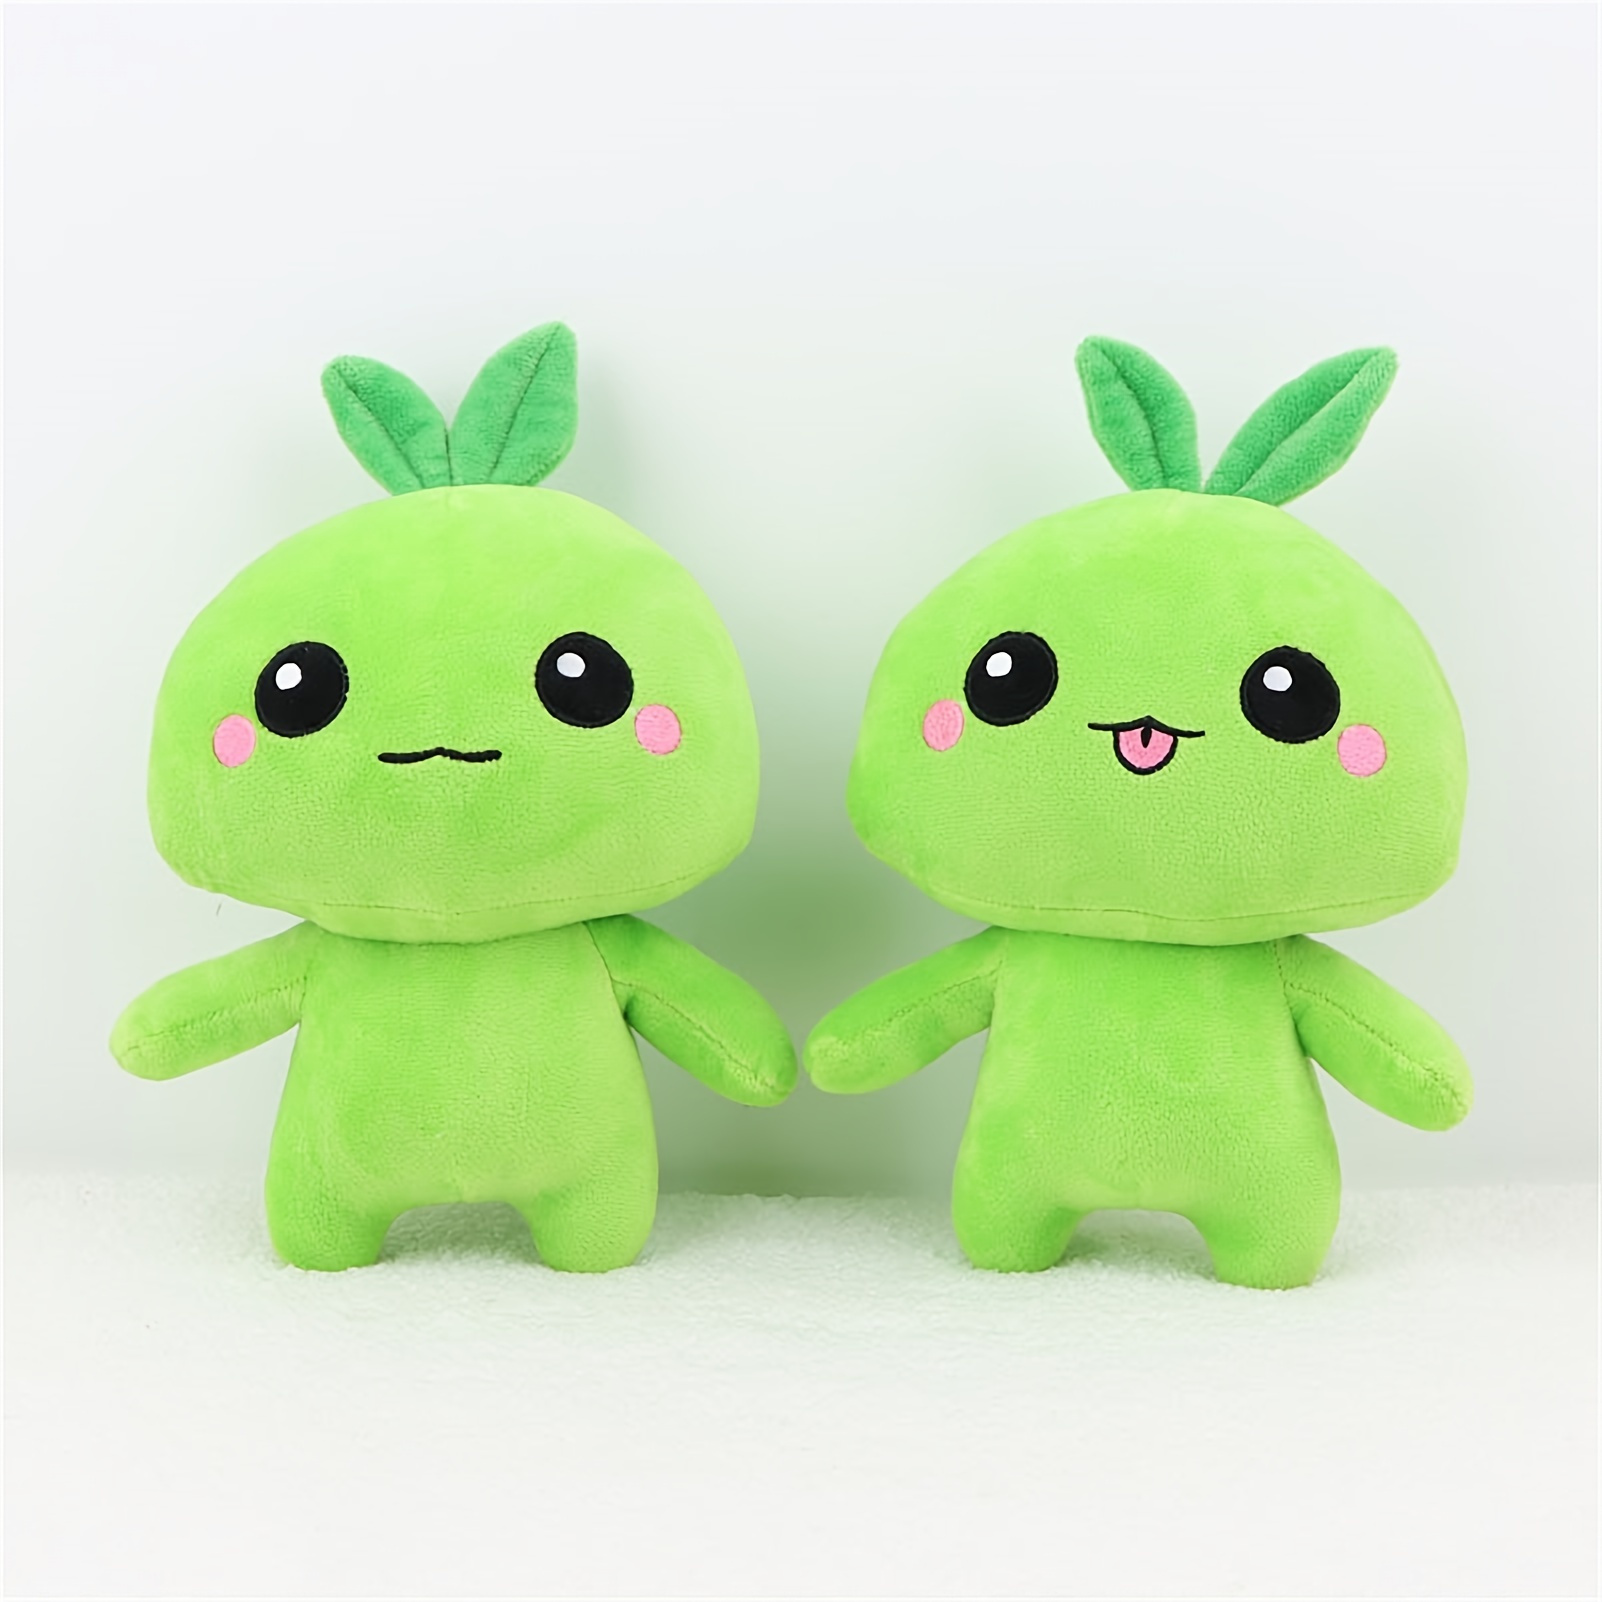 Kawaii Game Leaf Plush Toy Cute Green Seed Plushies Anime Game